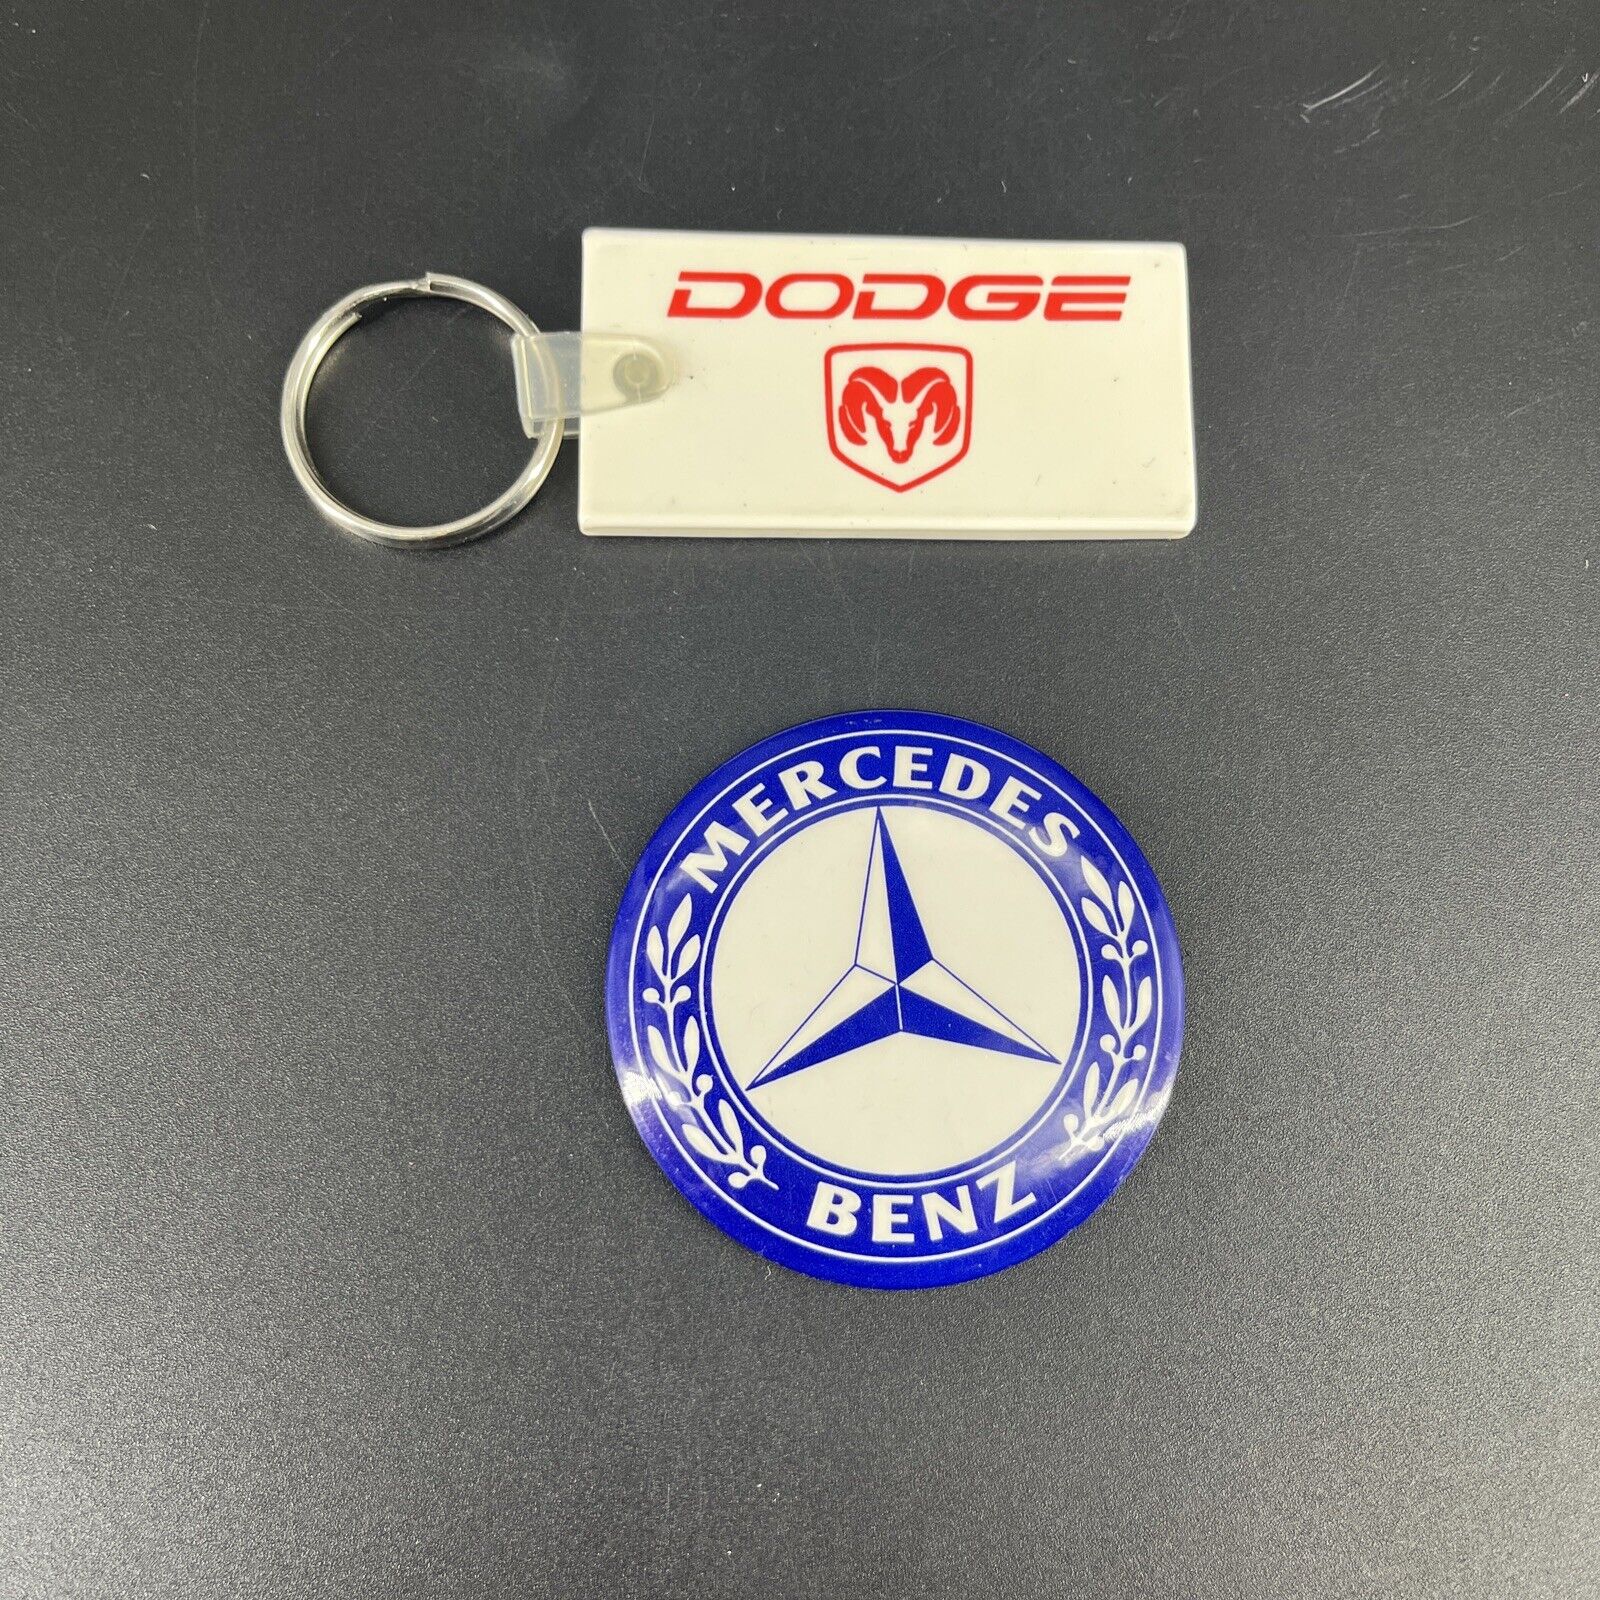 Vintage Advertising Dodge RAM Logo Rubber Keychain + Mercedes Benz Magnet